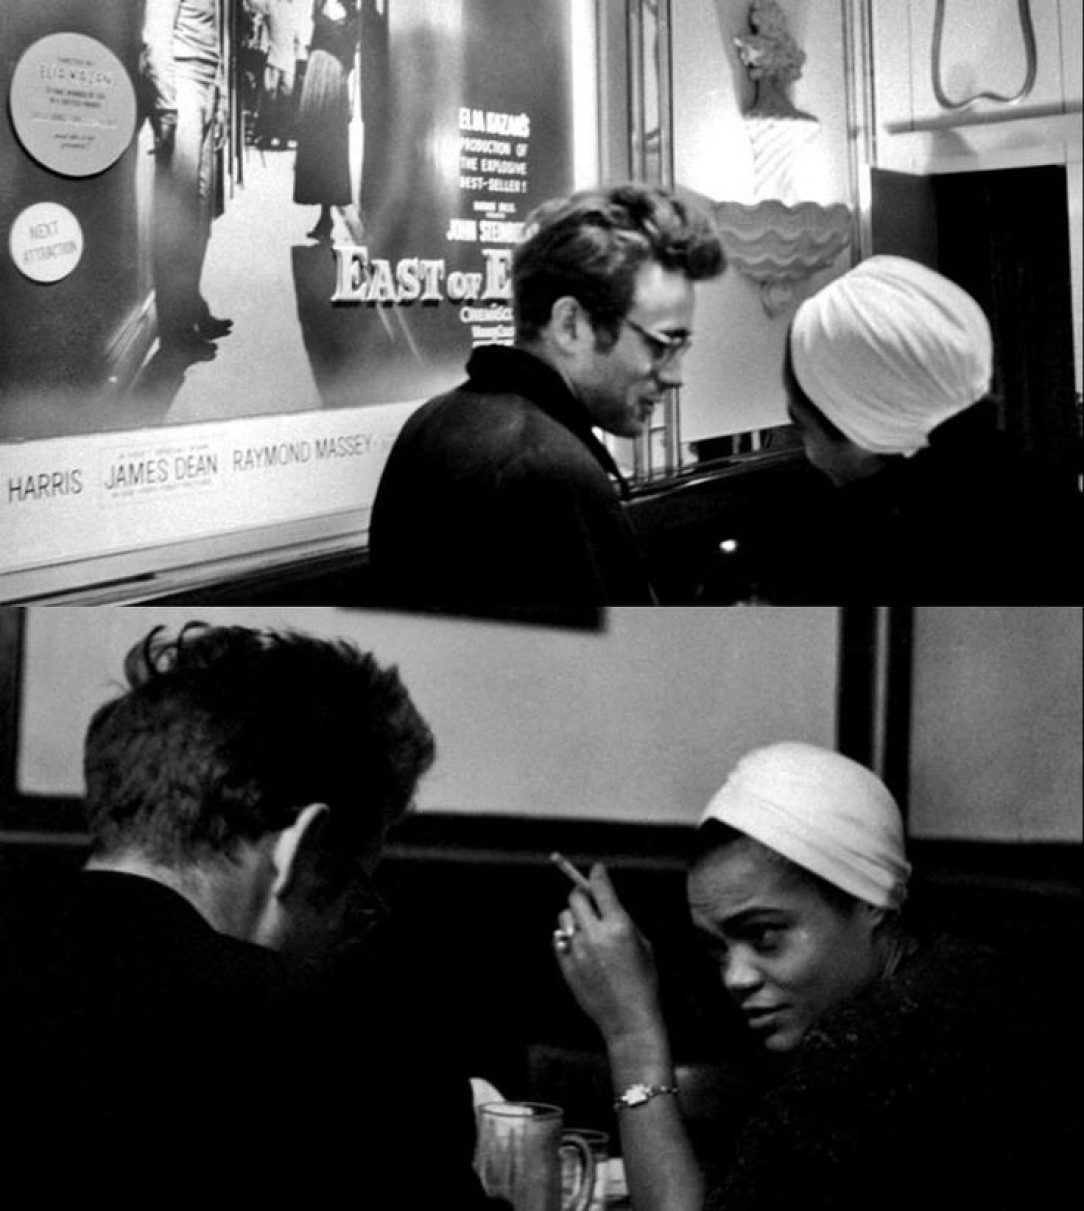 James Dean and Eartha Kitt at a bar in New York, 1955